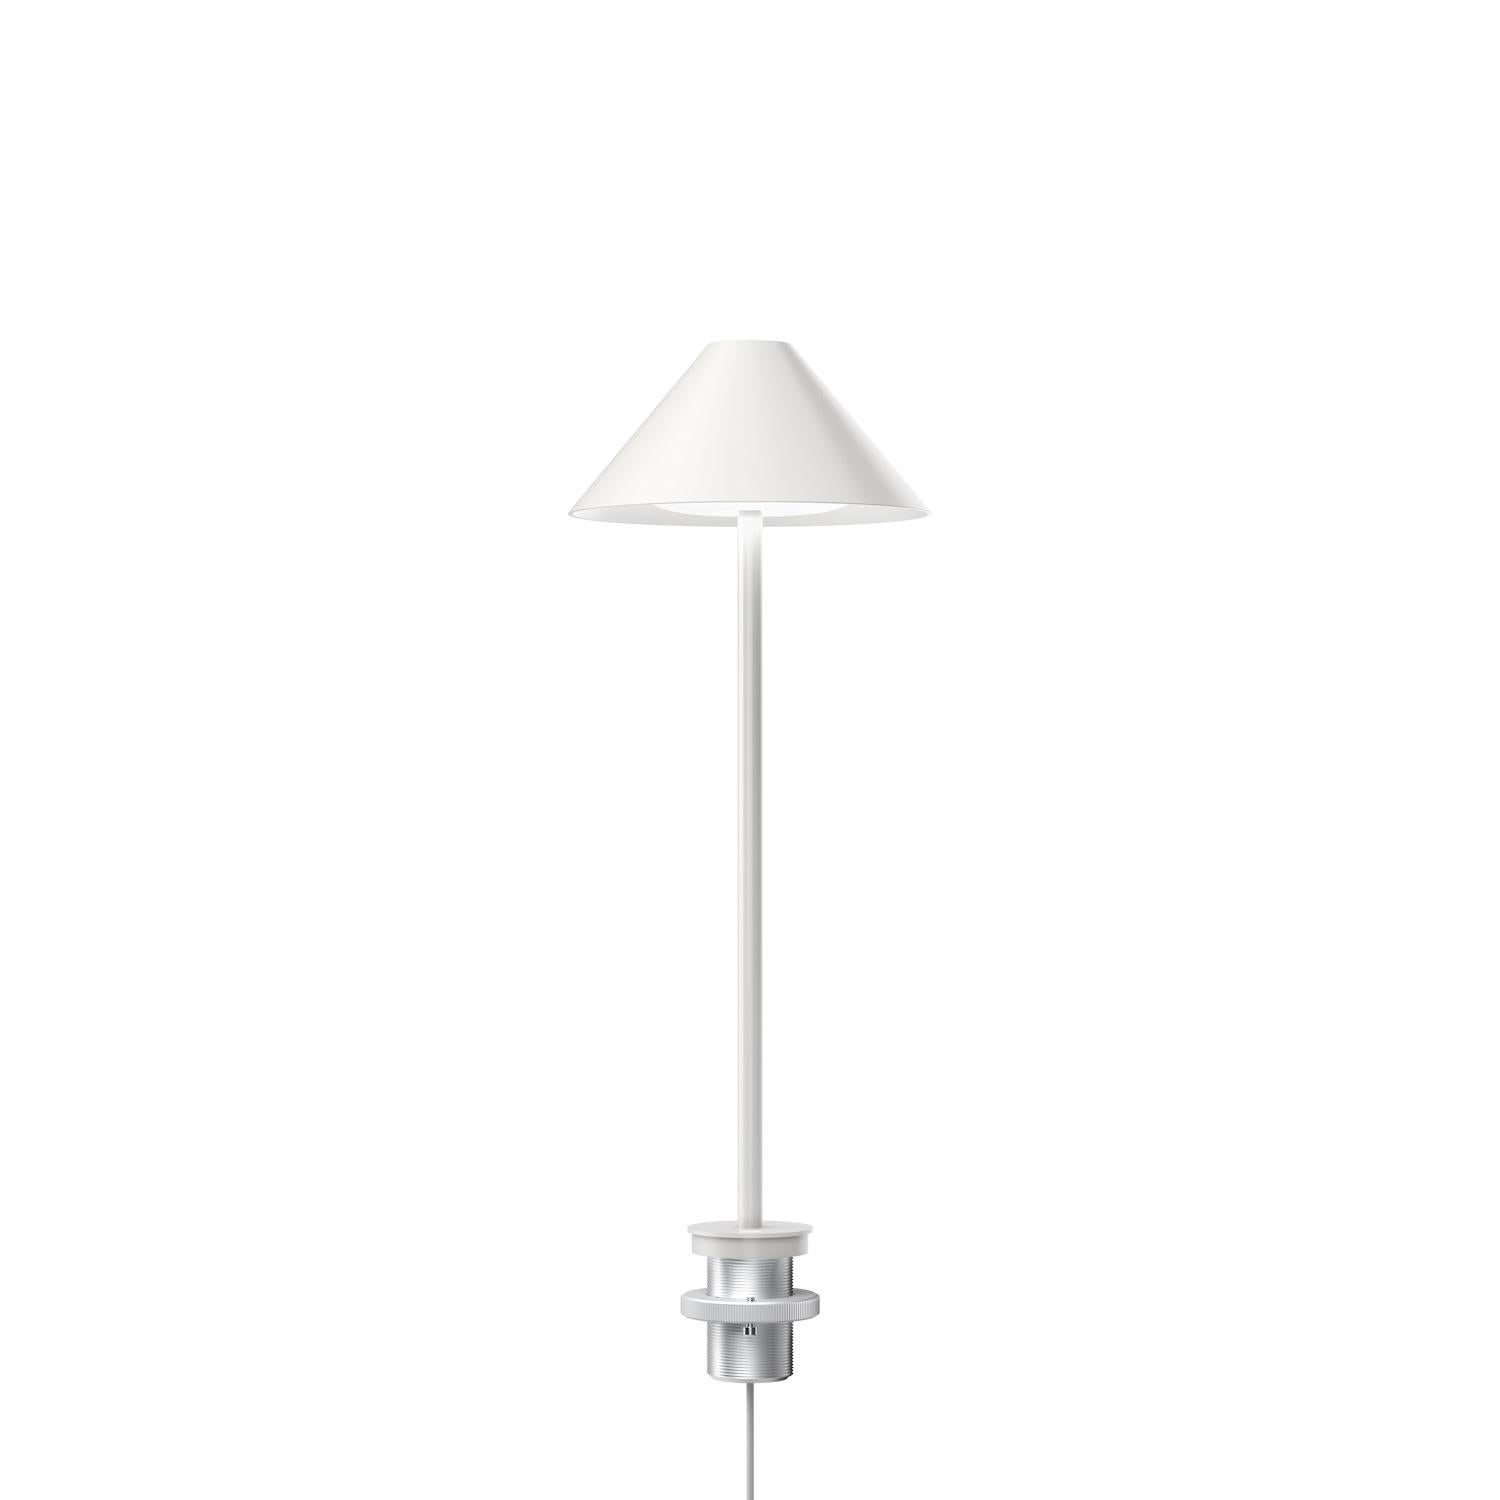 French Keglen Table Lamp by Louis Poulsen. For Sale